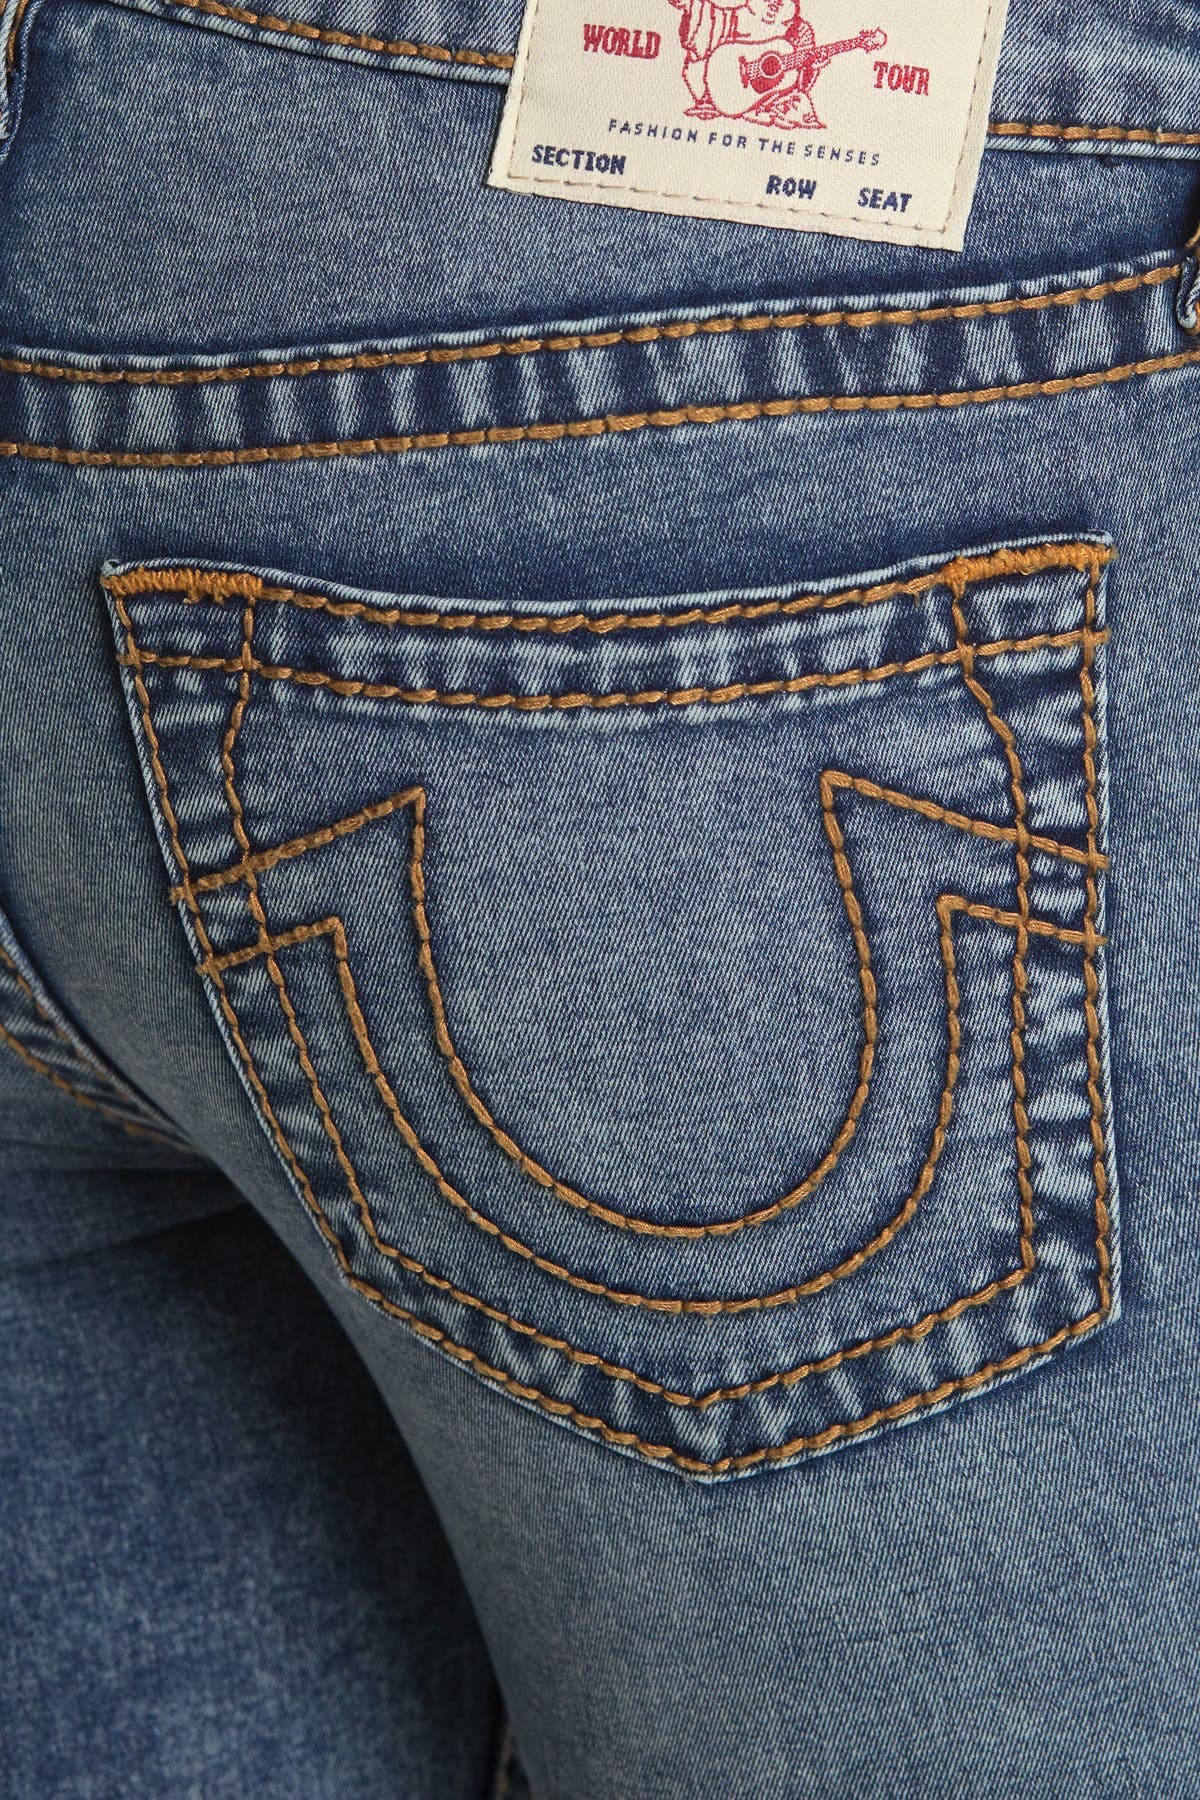 true religion big t skinny jeans